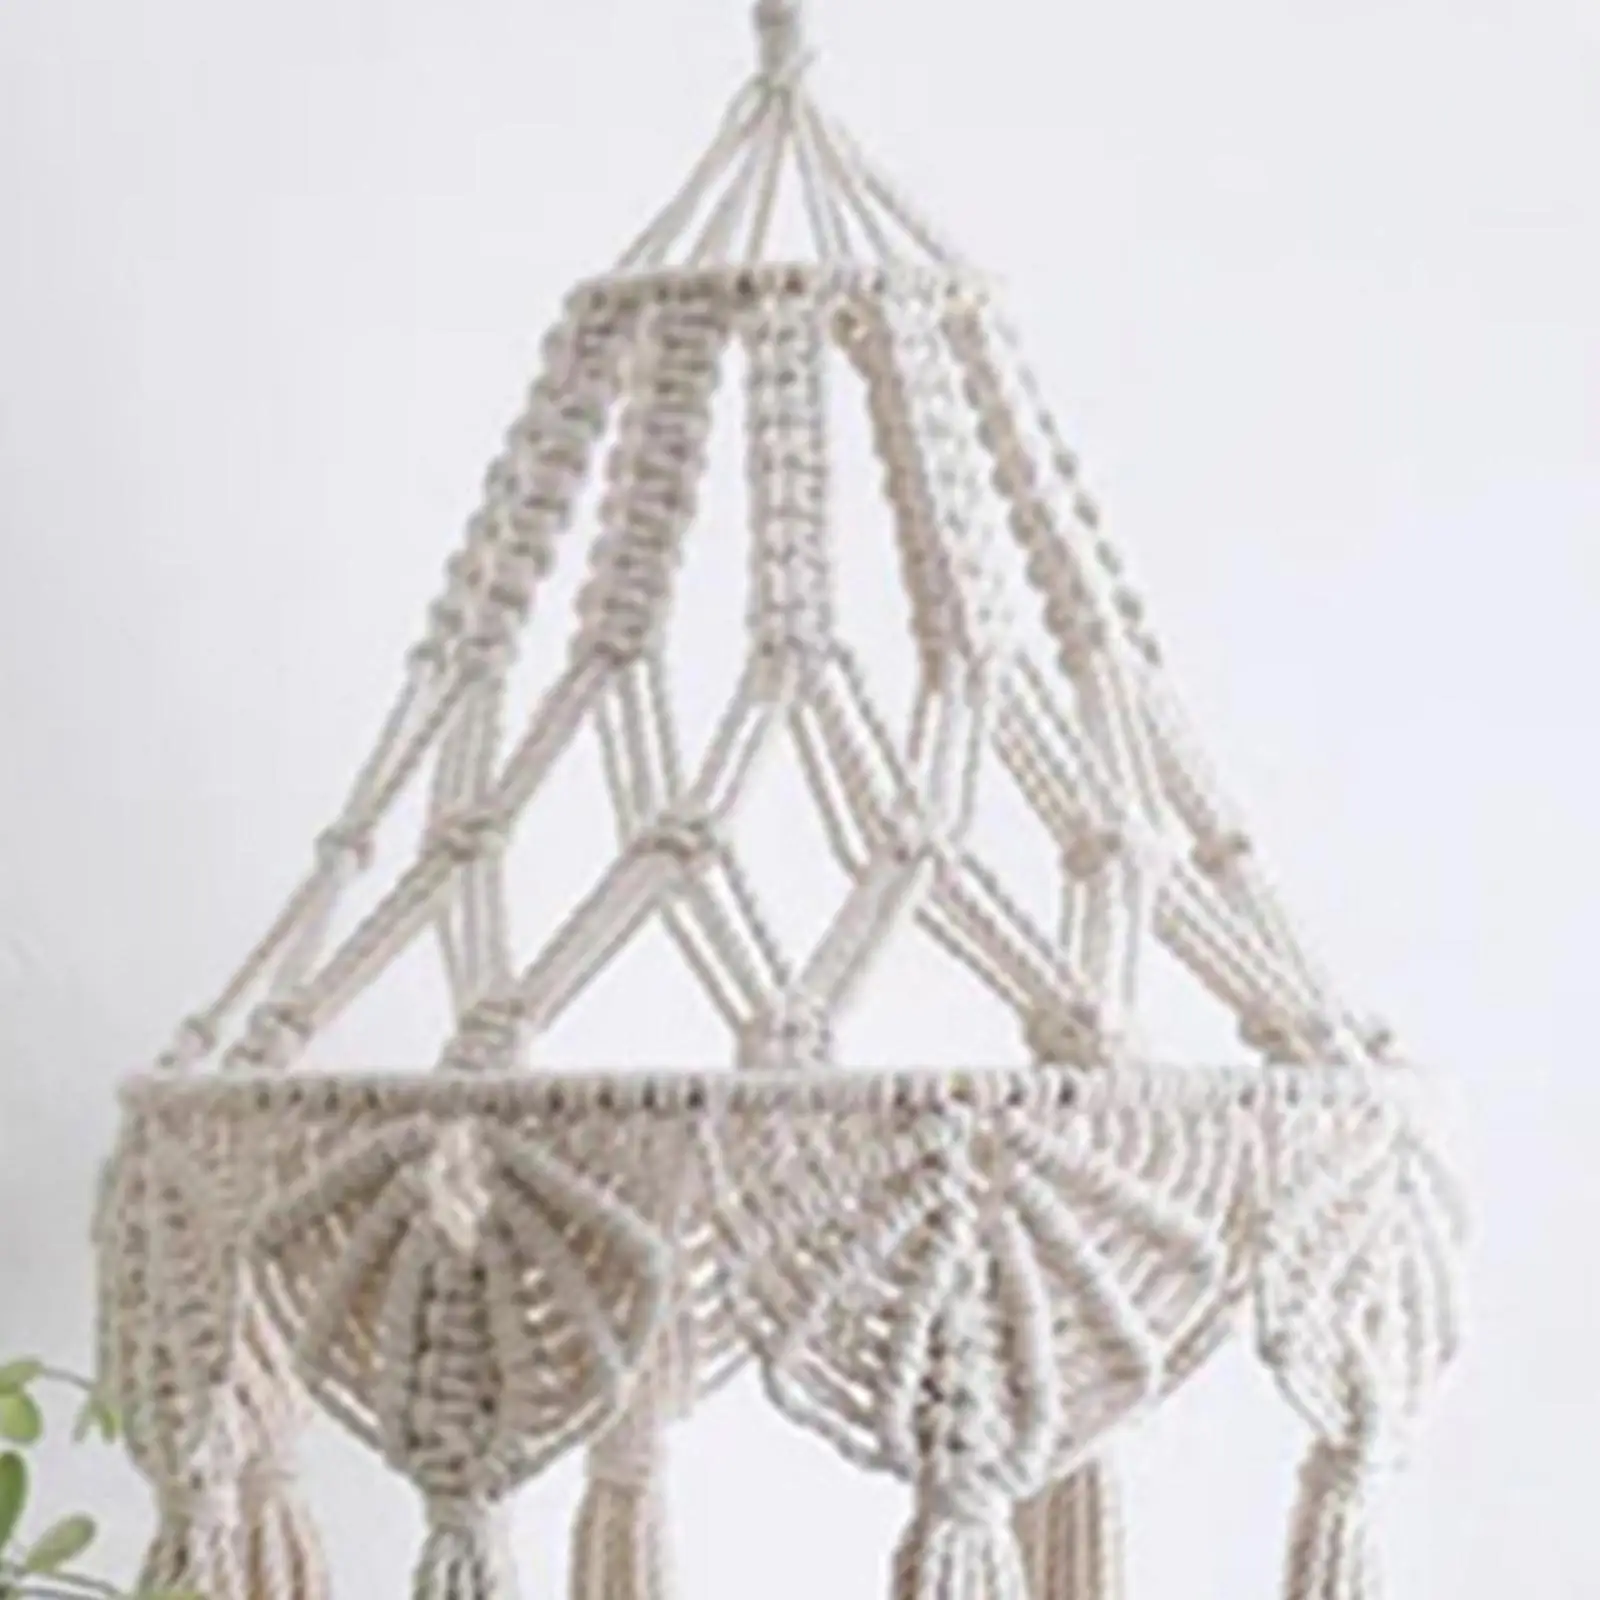 Knitting Macrame Lamp Shade Bohemian Hanging Lampshade for Hotel Decoration